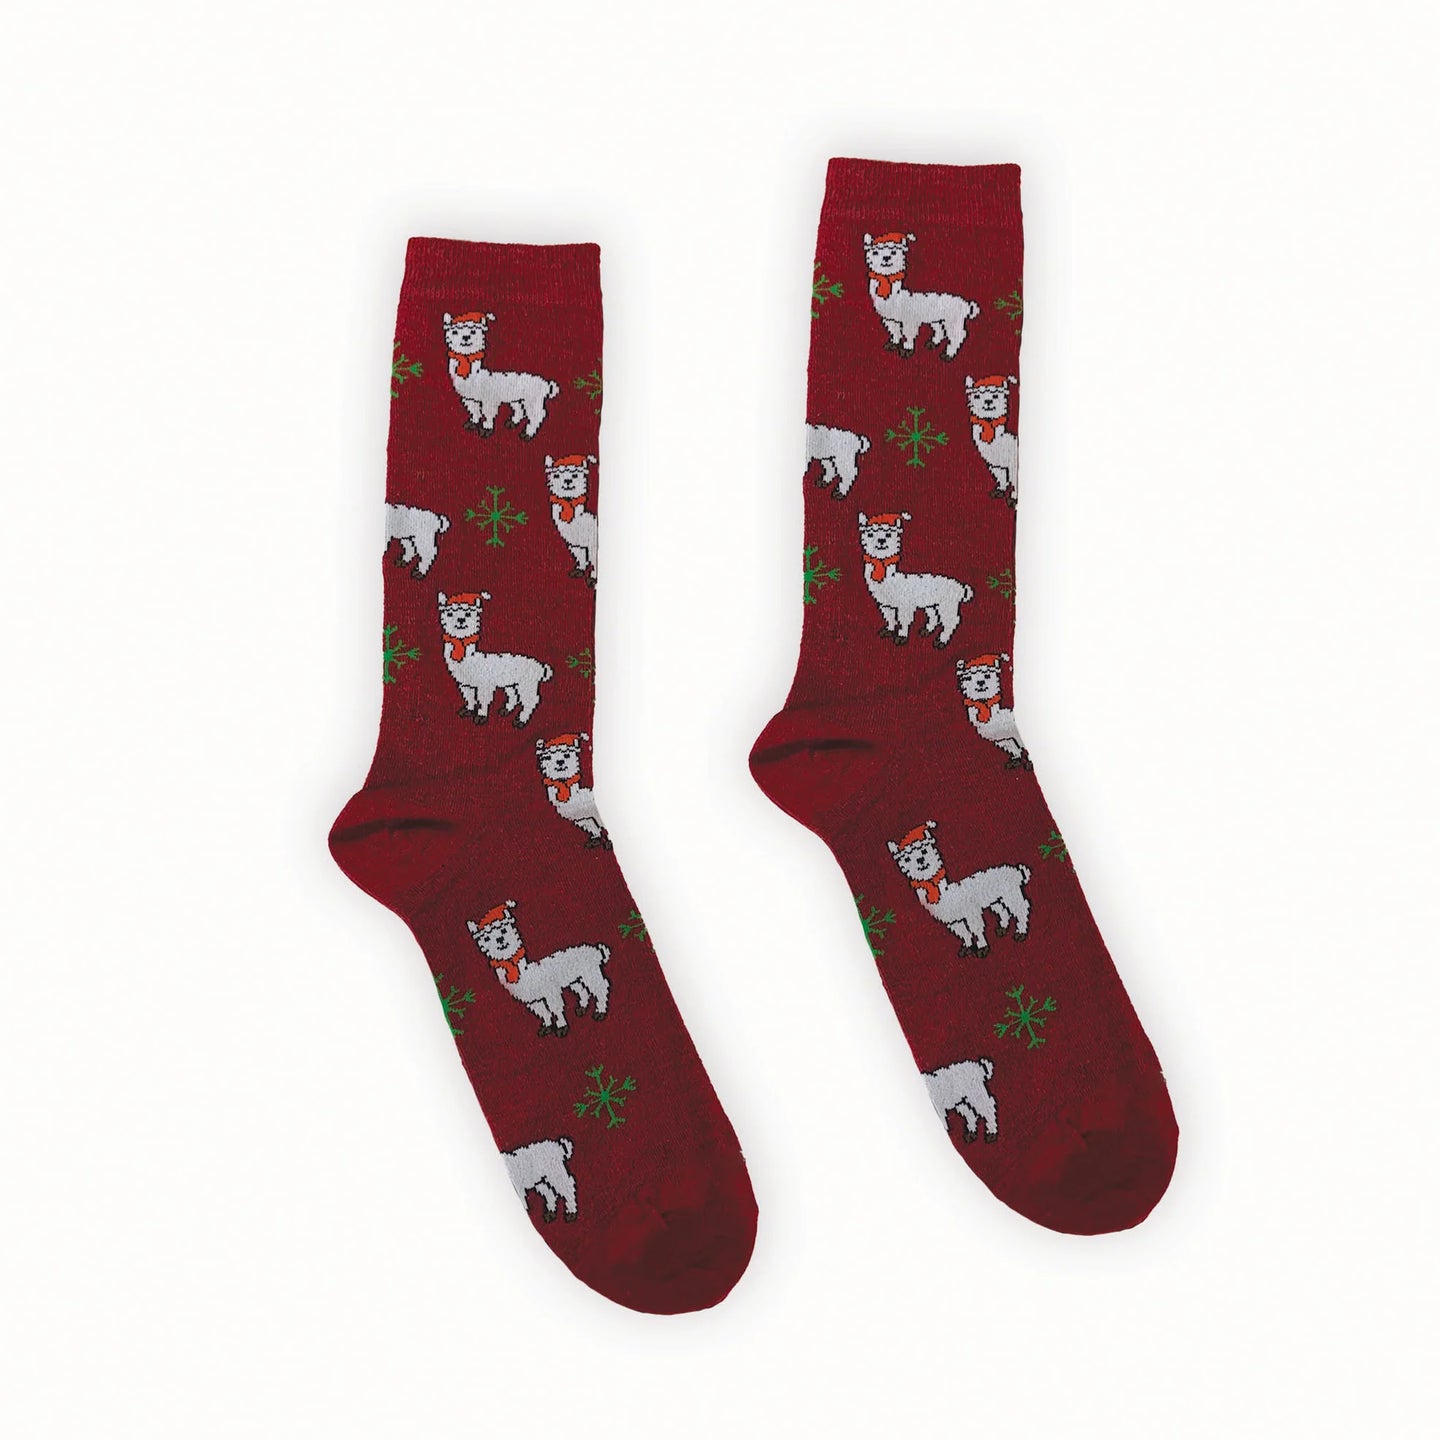 Seasonal Christmas Socks